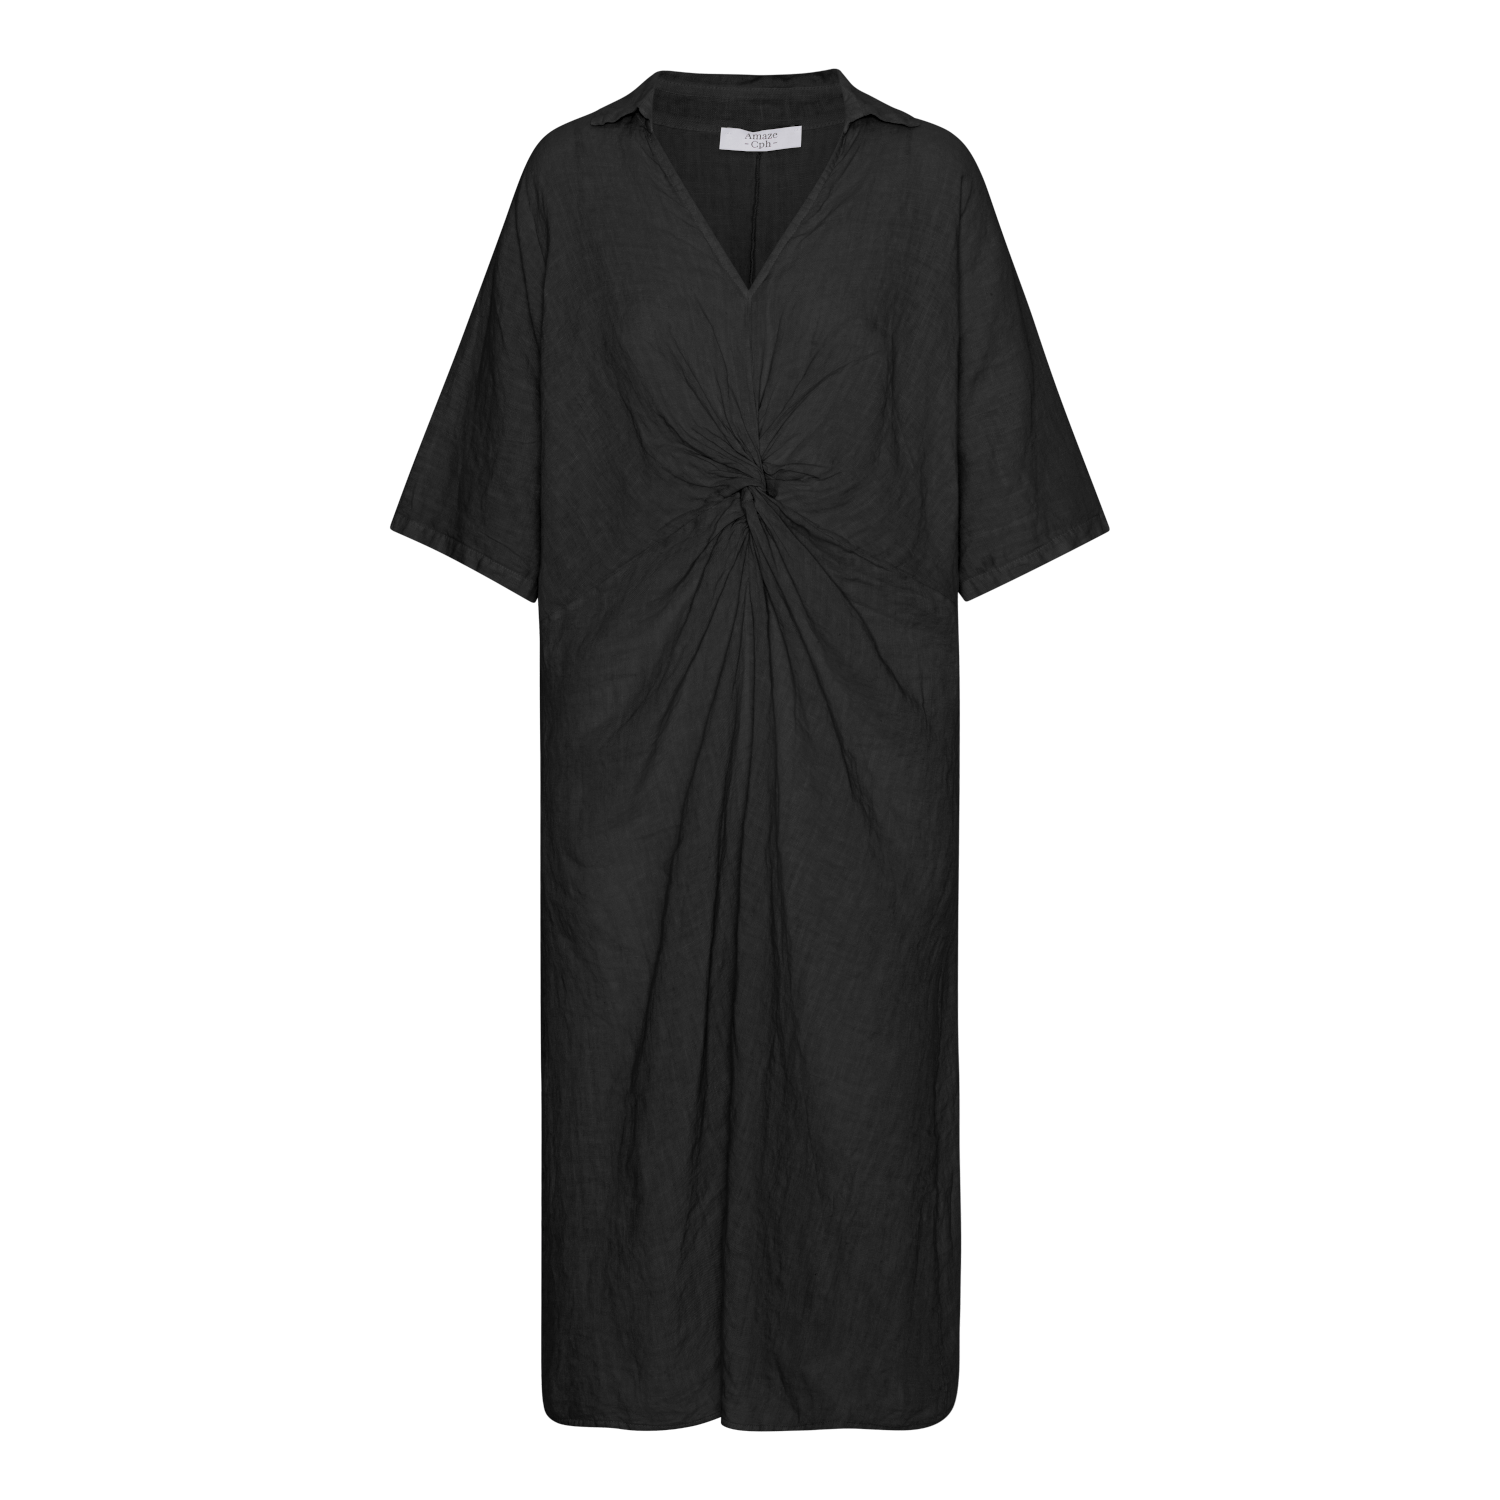 Linen Twist Dress - Black - Amaze Cph - Black - S/M